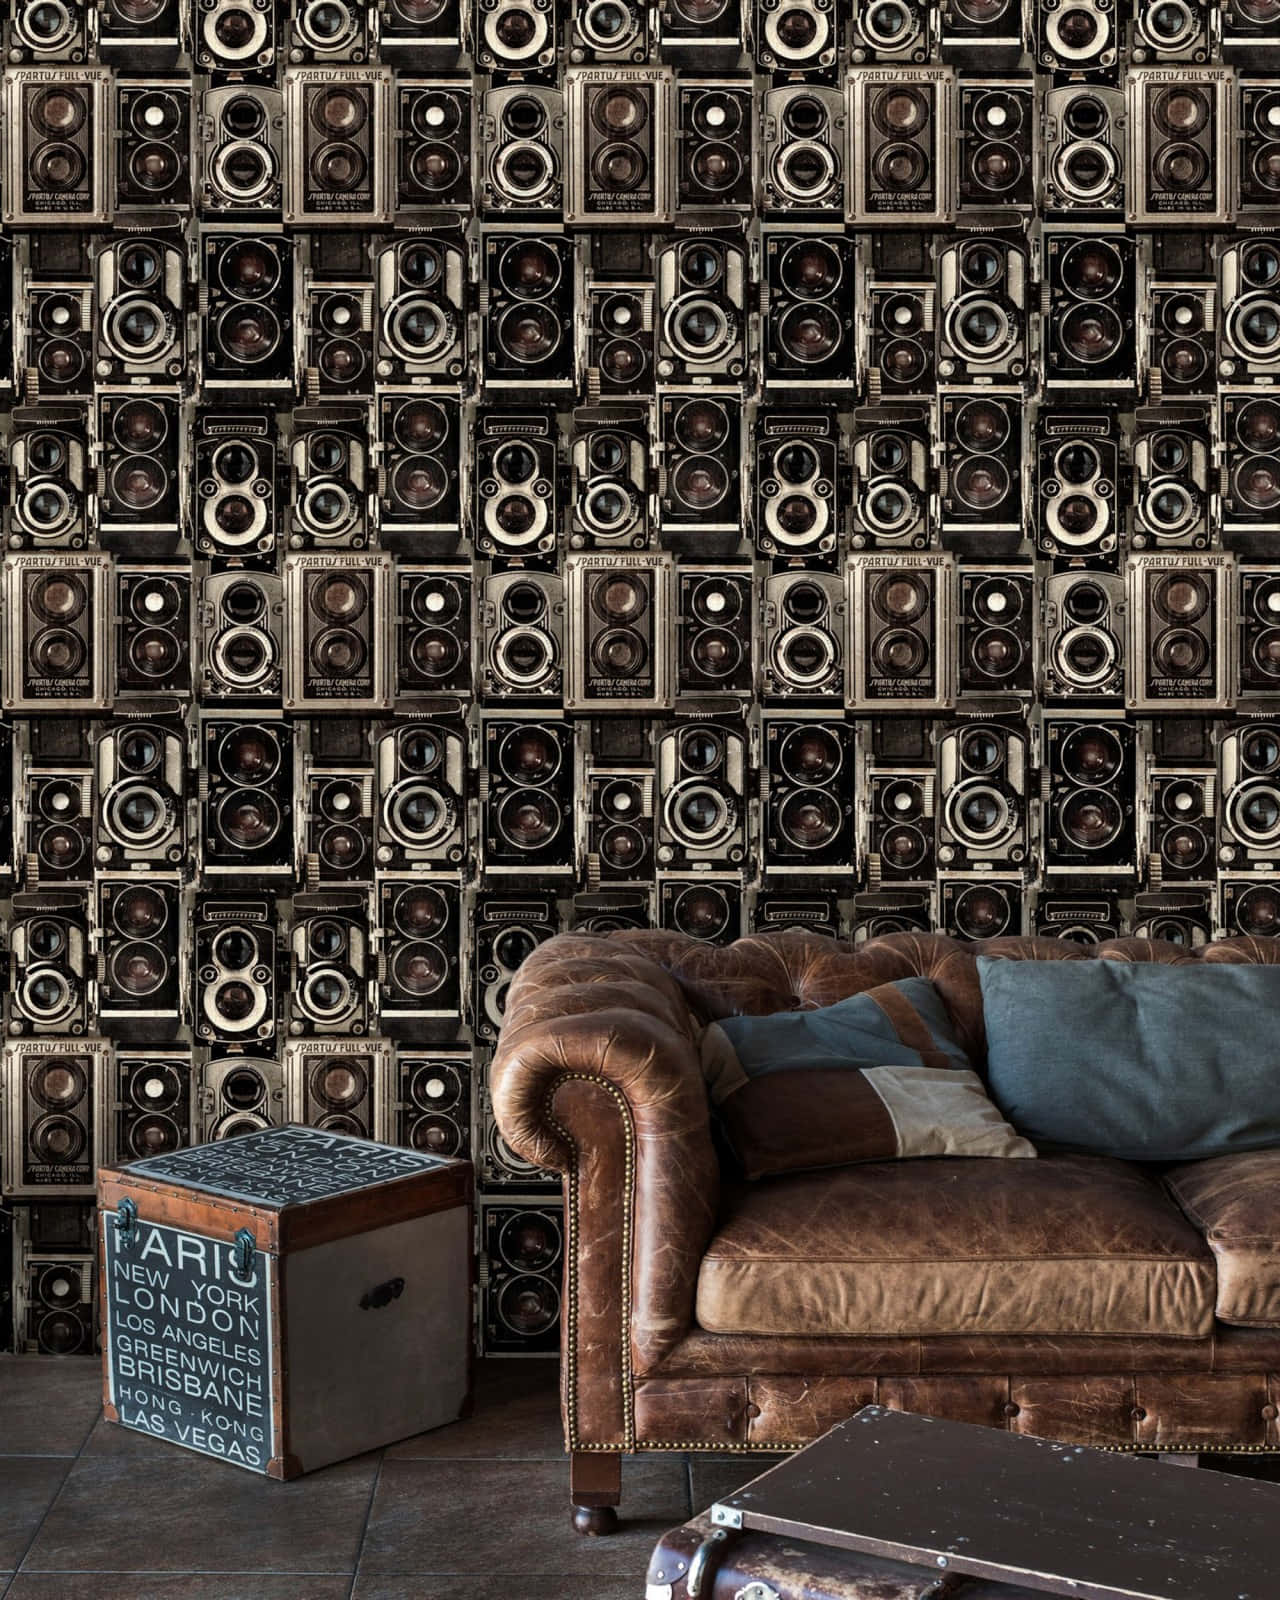 Obscure Room Full Of Speakers Wallpaper